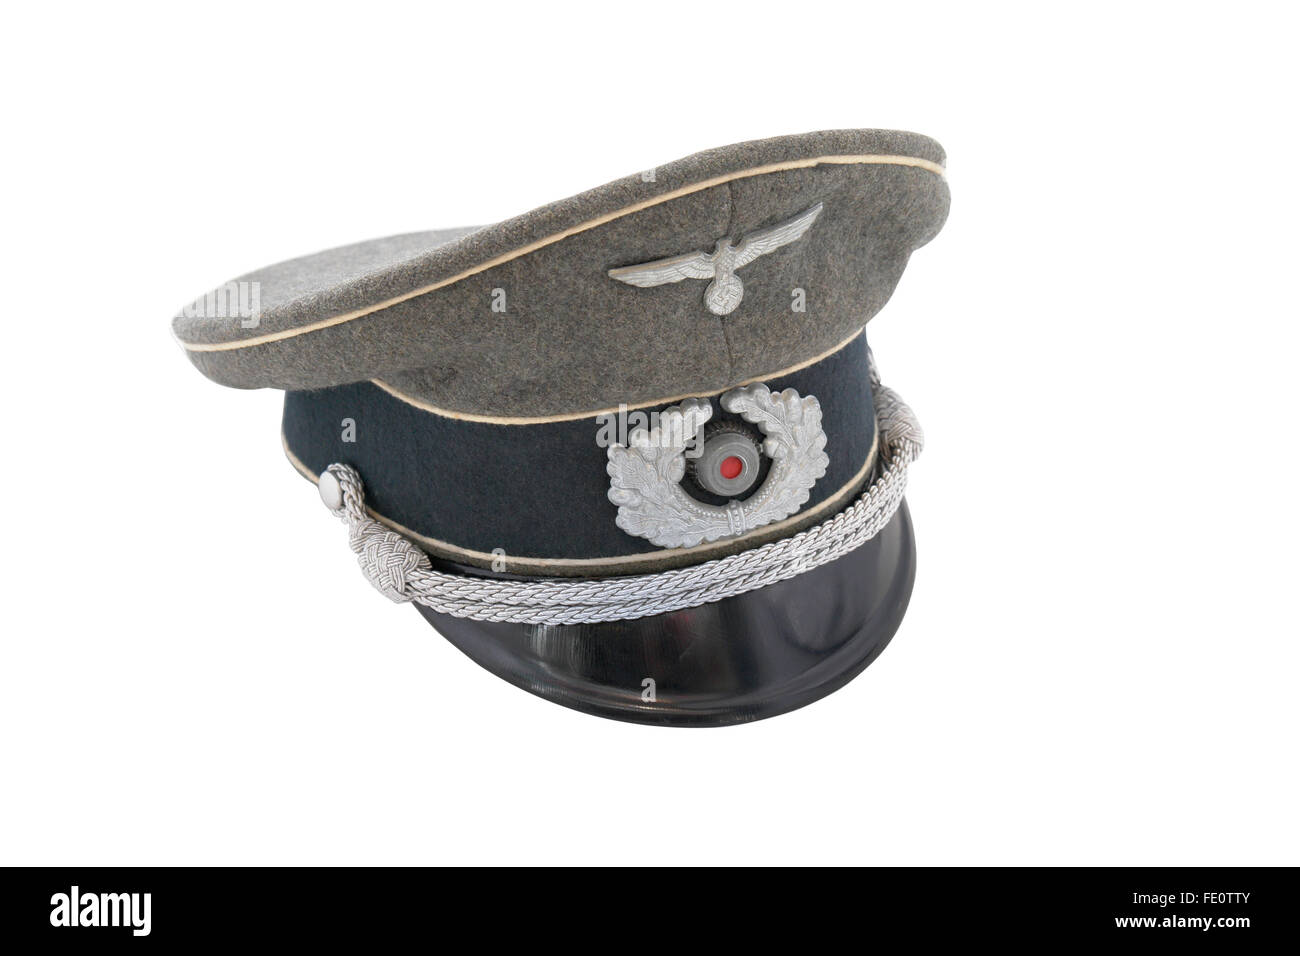 Sombrero de oficial alemán fotografías e imágenes de alta resolución - Alamy